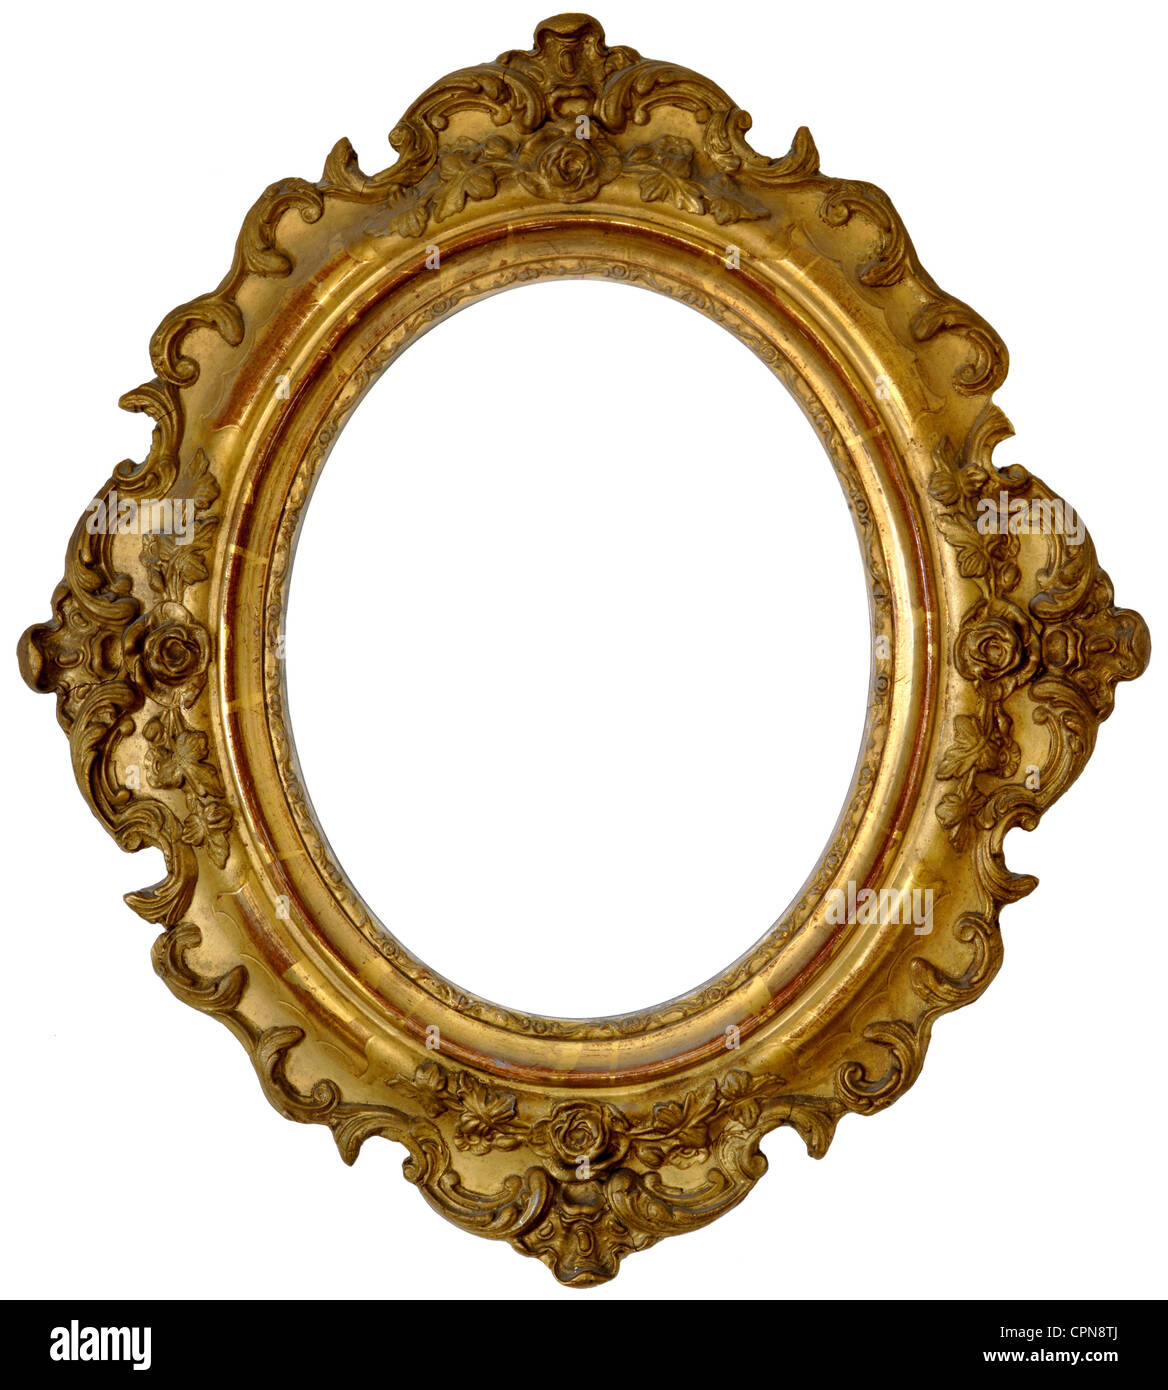 Bildende Kunst, Bilderrahmen, goldenen Bilderrahmen Oval, hölzernen Rahmen, vergoldet, Deutschland, ca. 1835, Biedermeierstil, Bieder Stockfoto